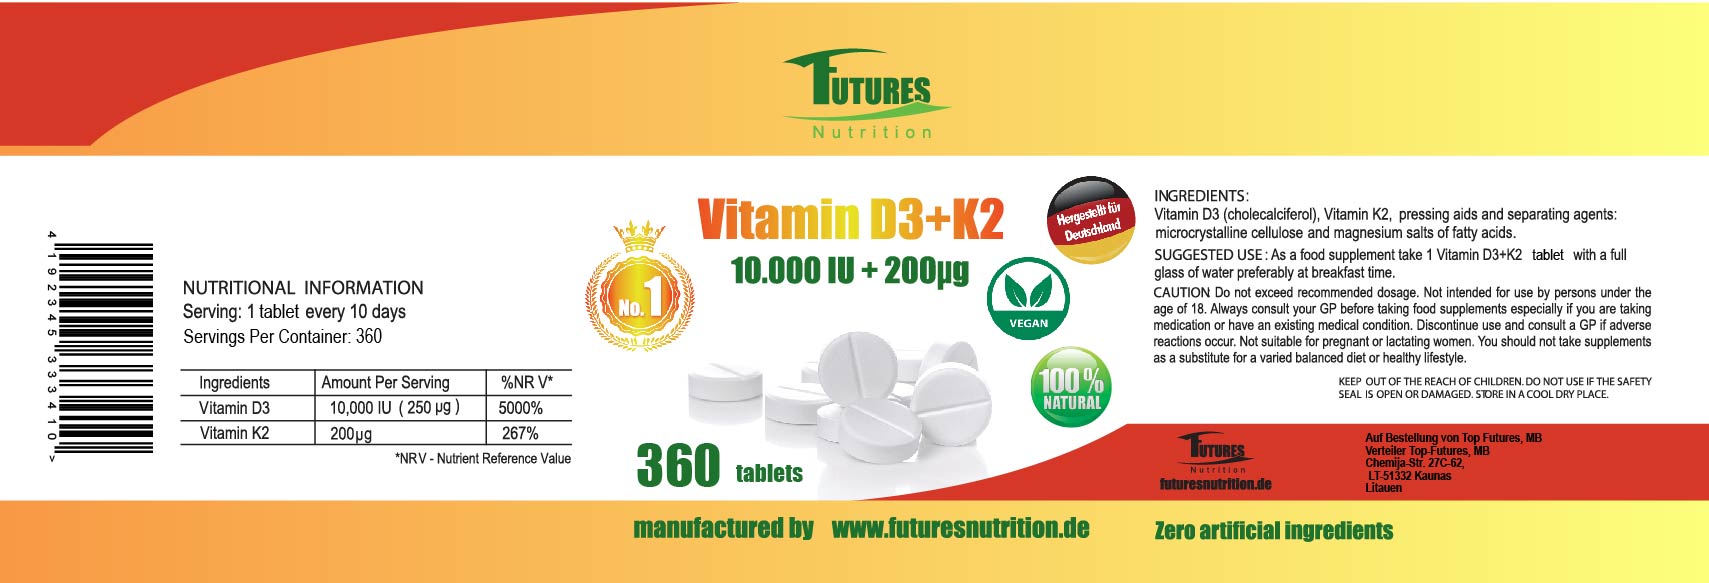 5 x Vitamin D3 K2 10000i.e 1800 tablets